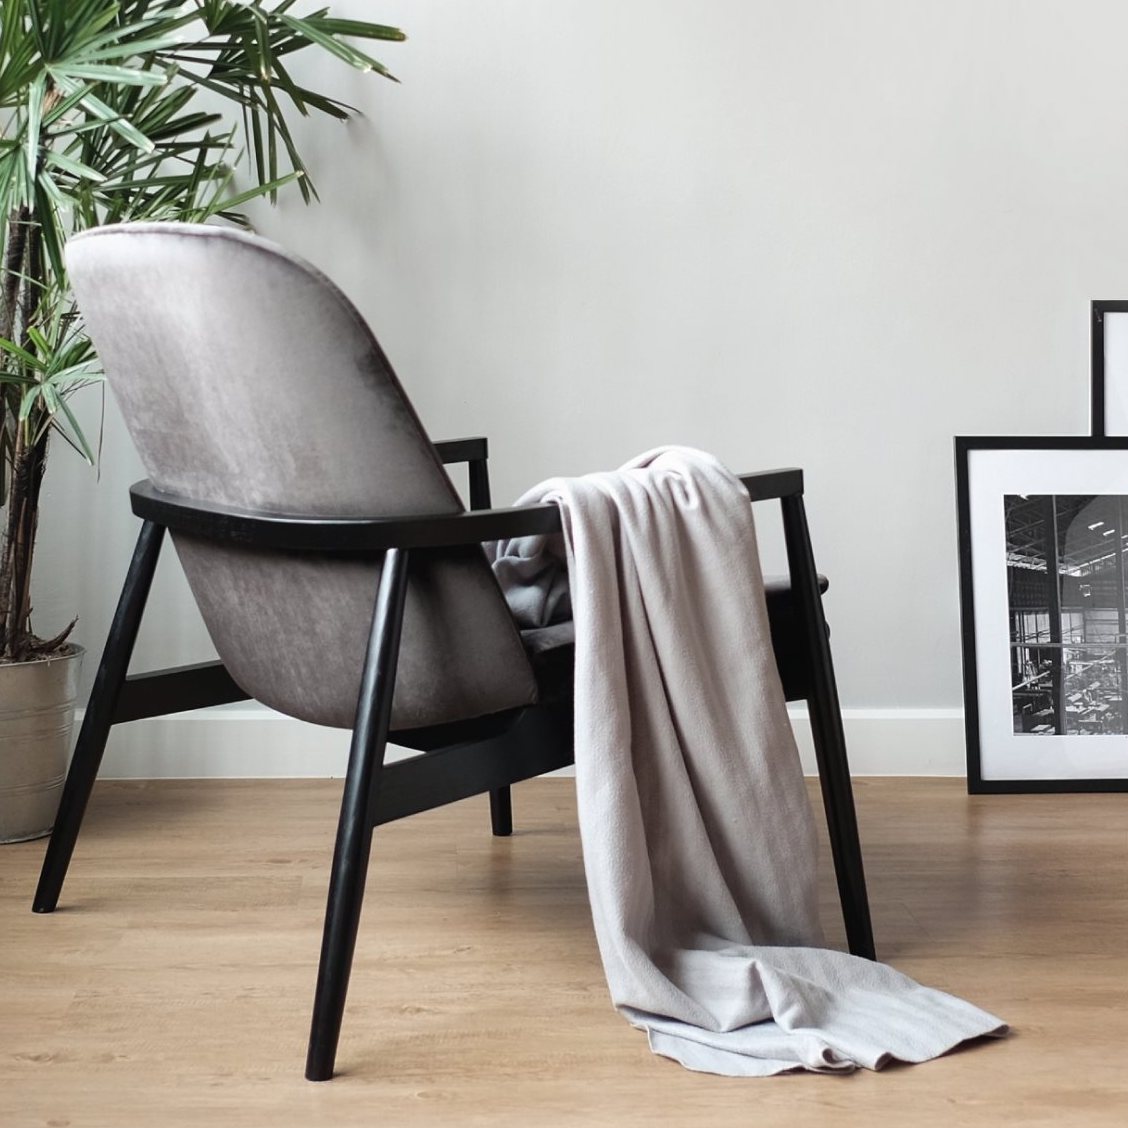 Filobula - SLice Lounge Chair